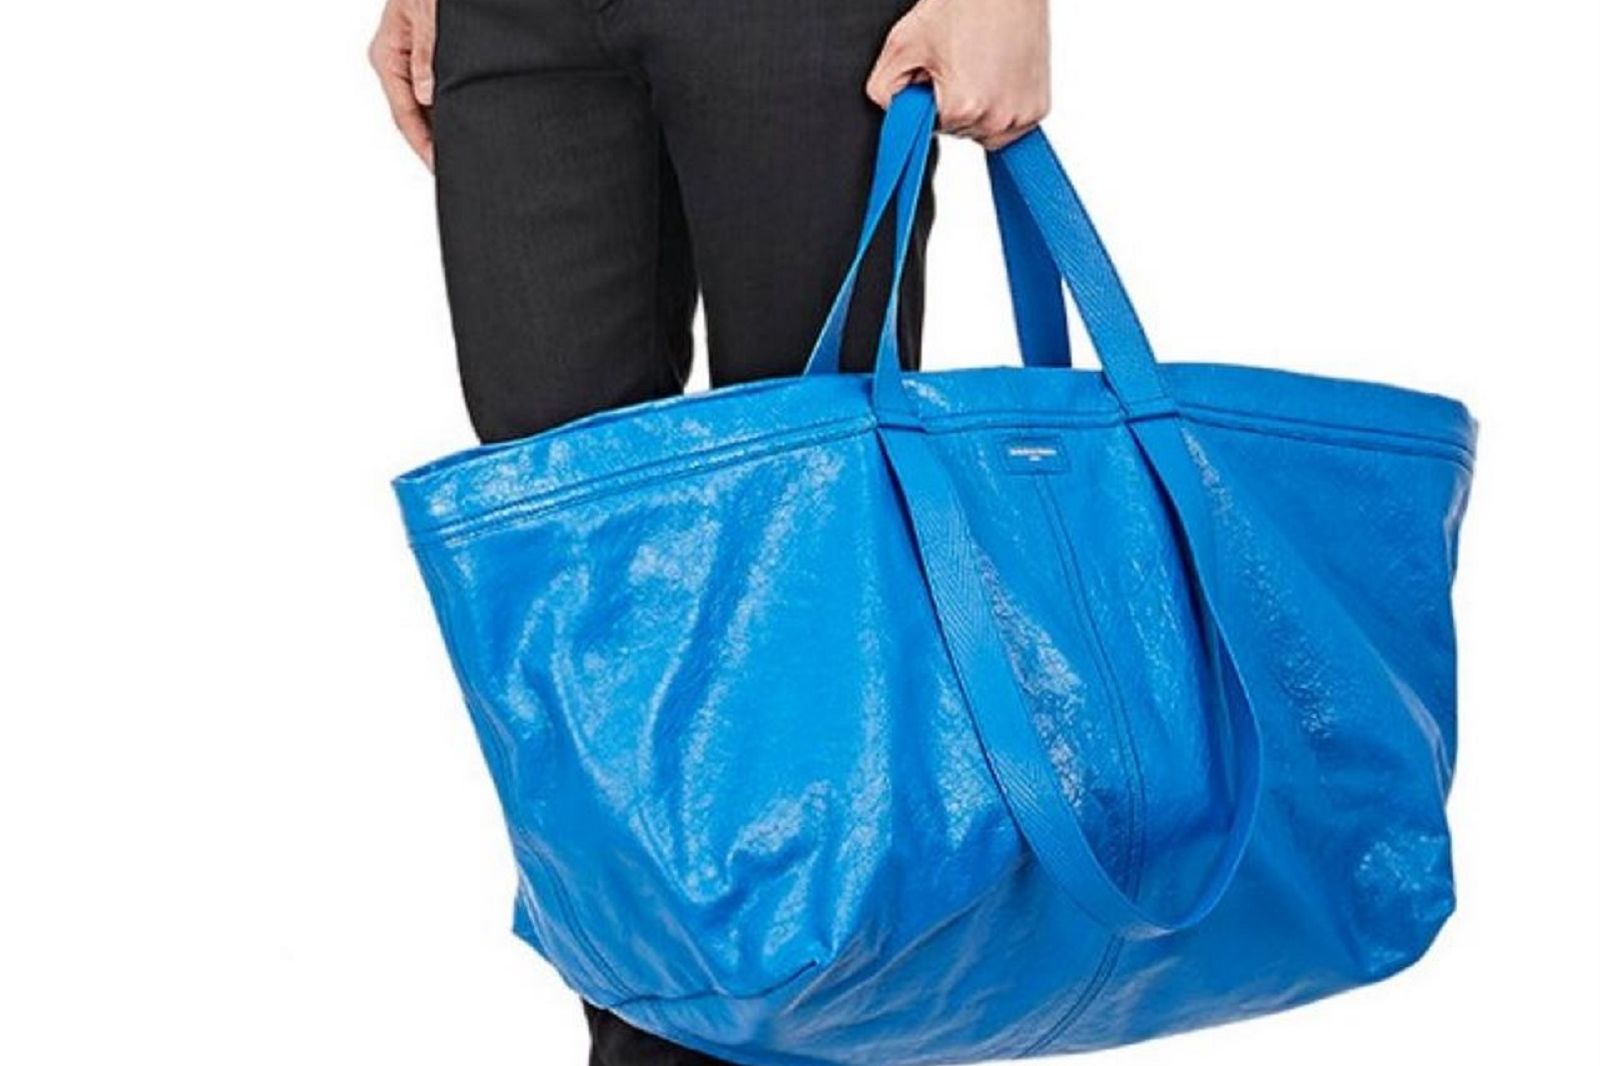 Benign omfattende Fatal Balenciaga's $2,145 bag is just like Ikea's 99 cent tote | CNN